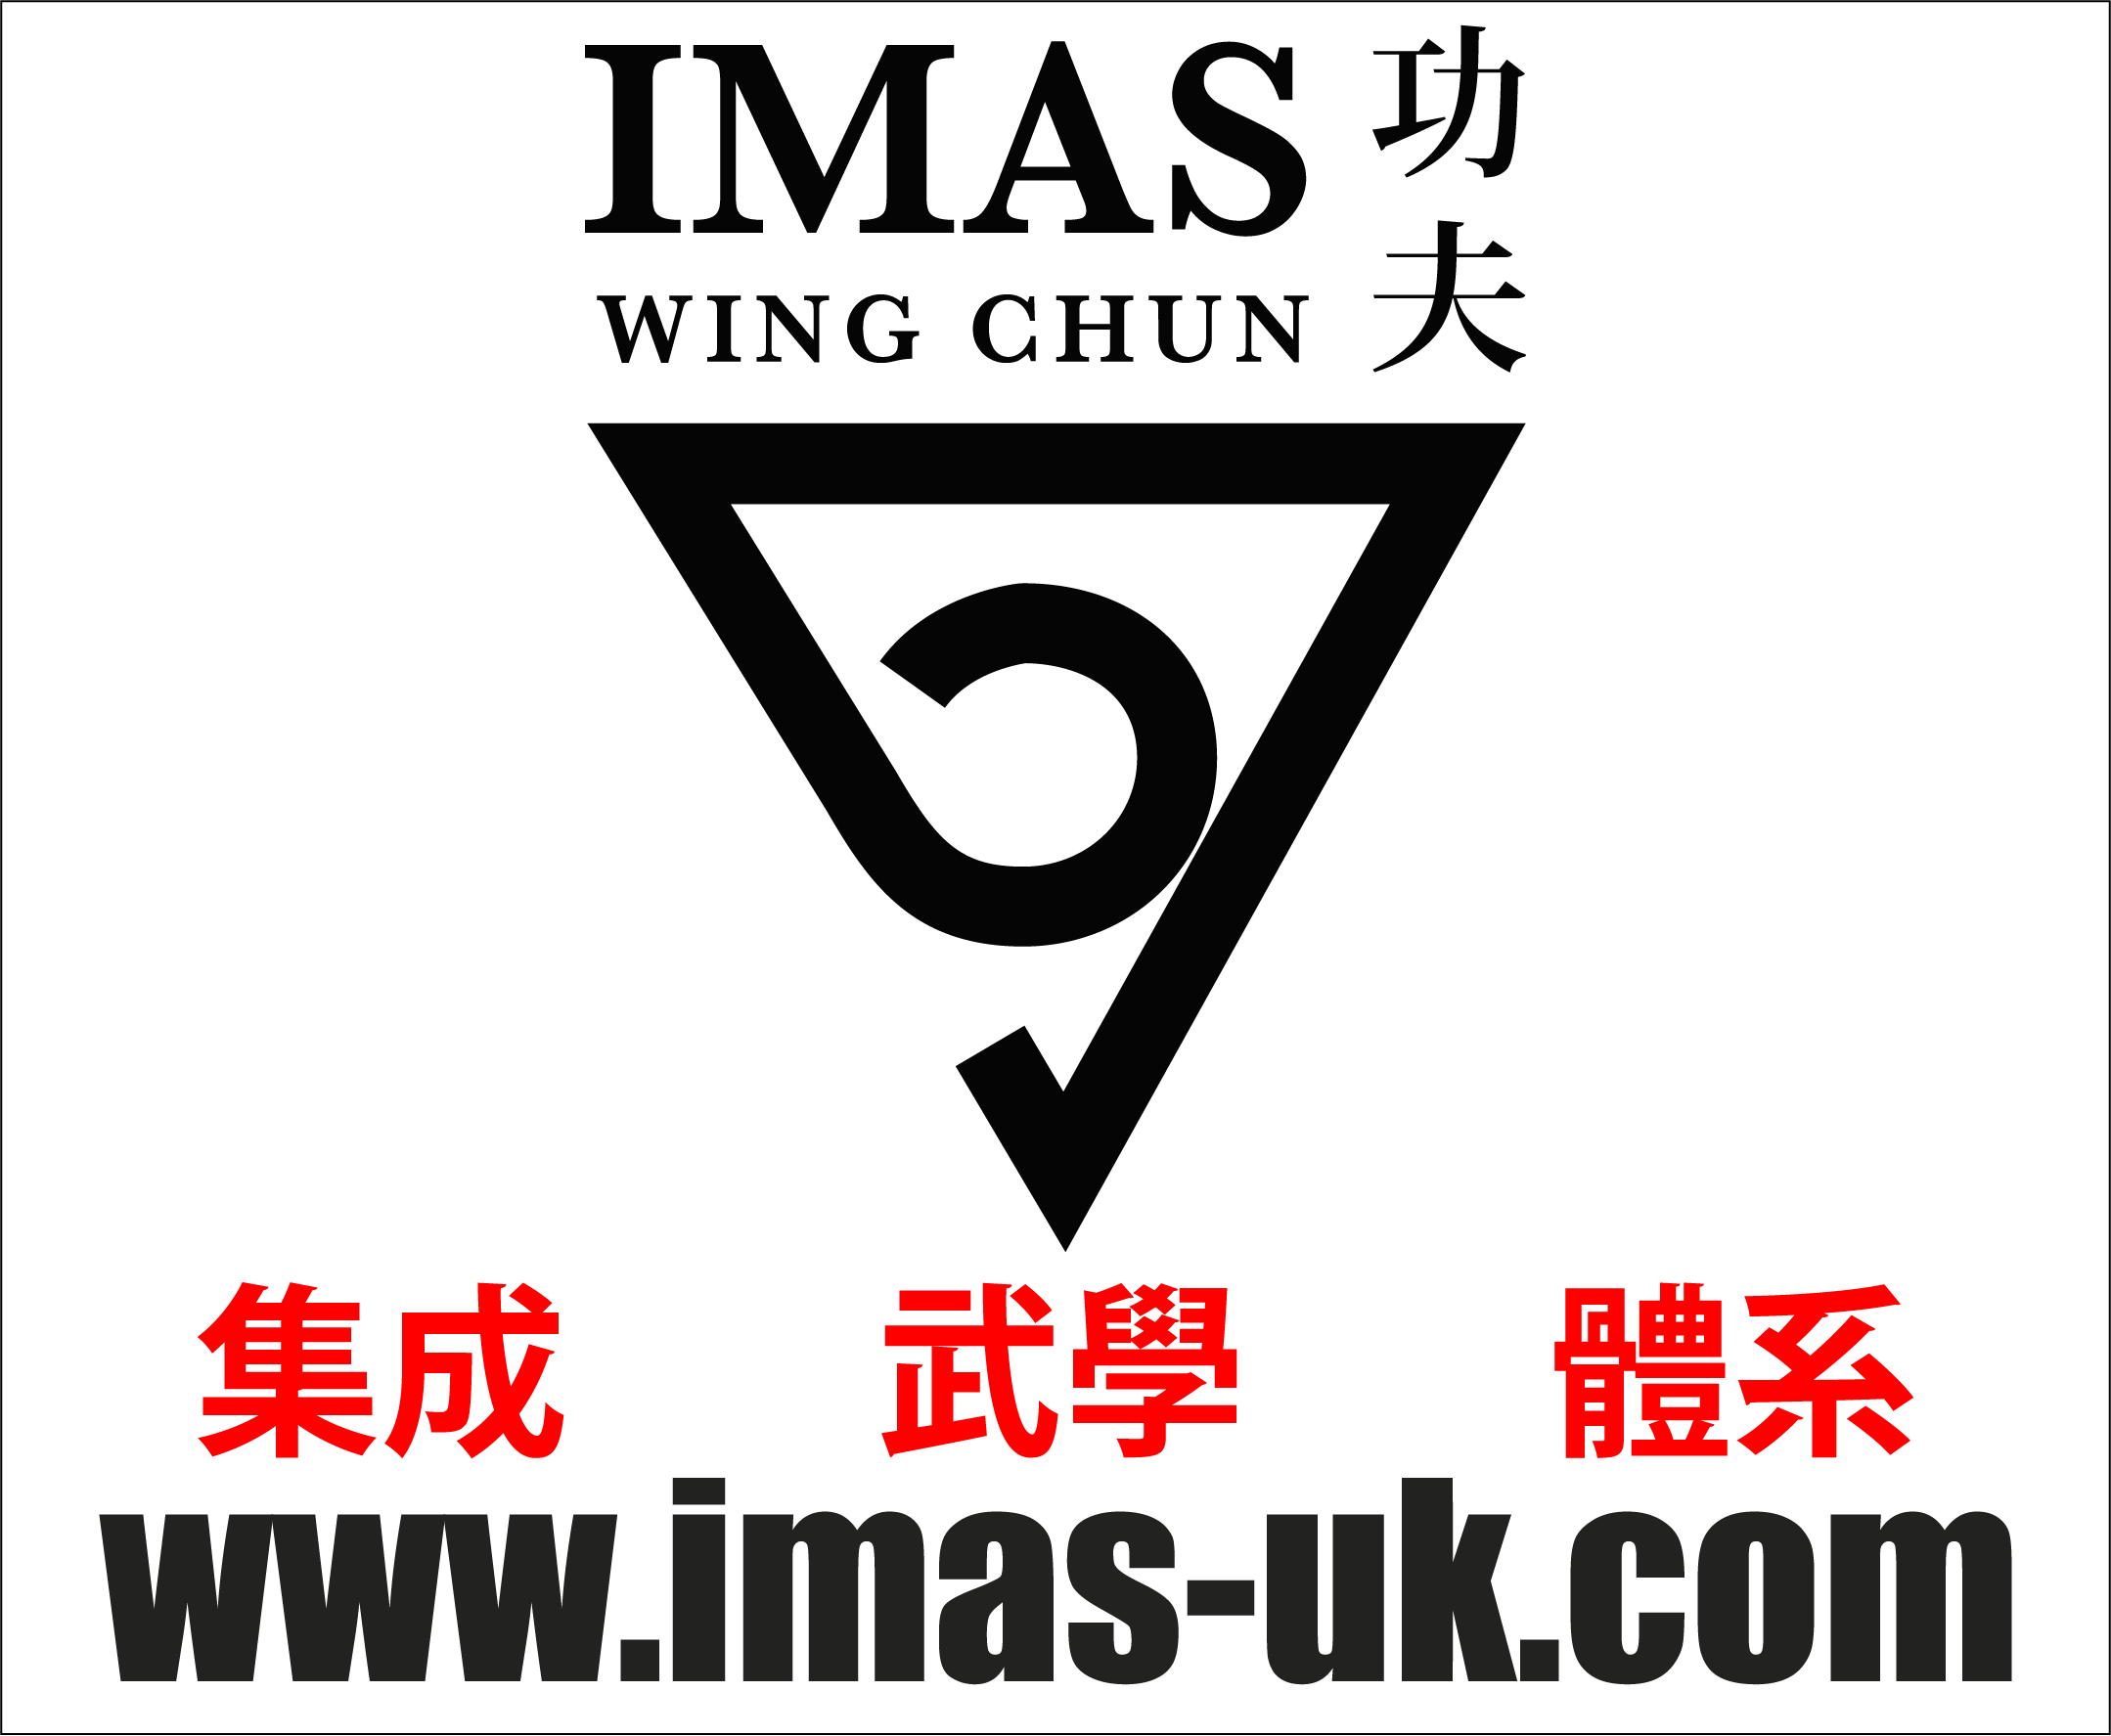 Imas Wing Chun